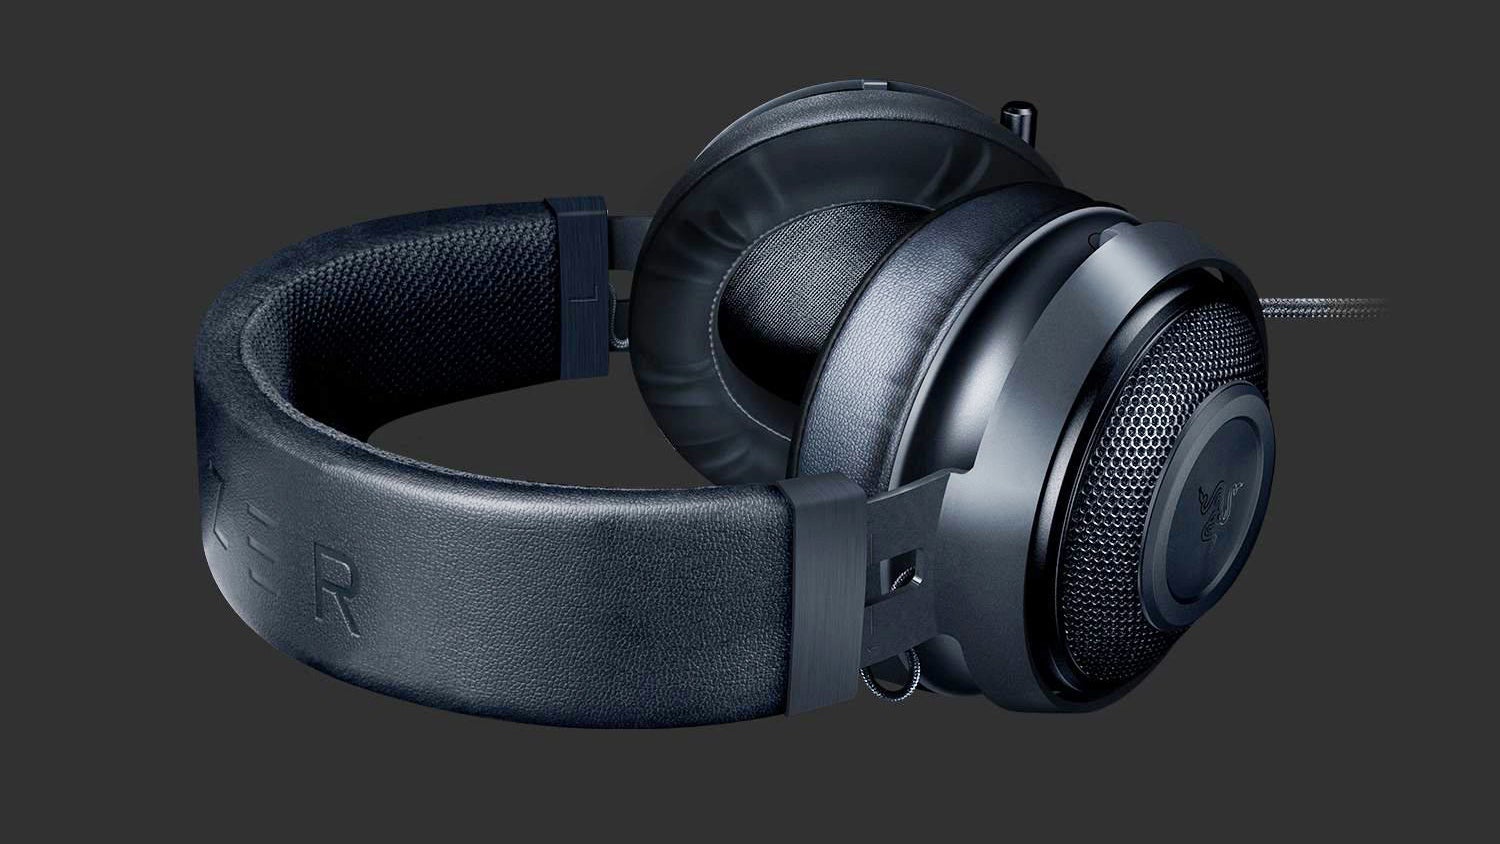 A photo of the Razer Kraken gaming headset in black